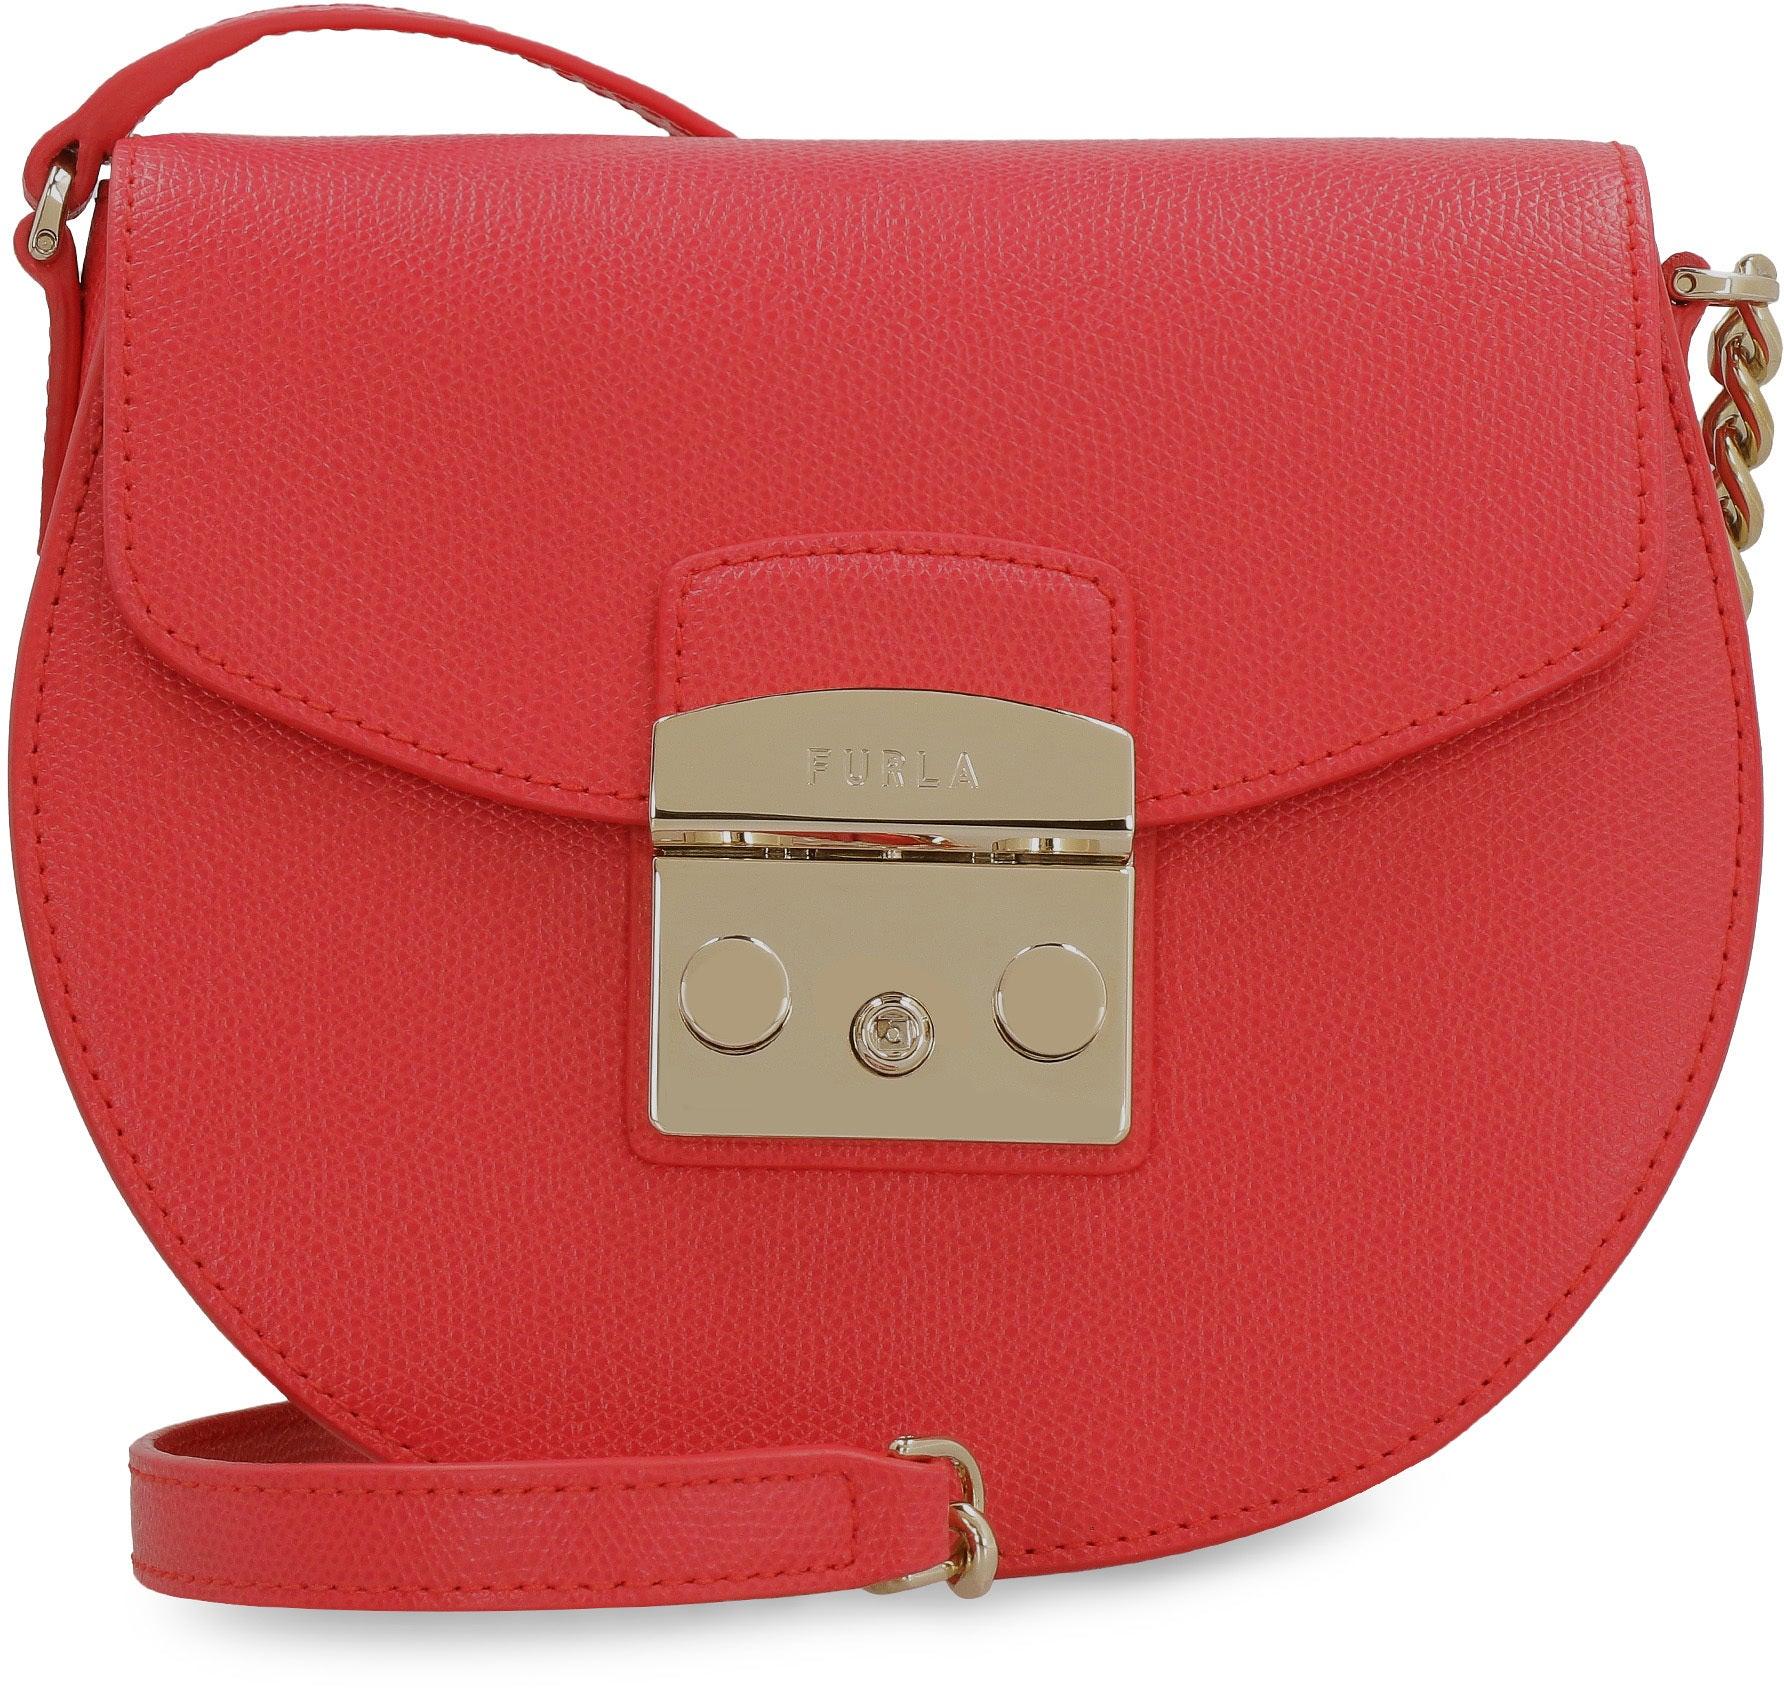 Furla Metropolis Leather Mini Crossbody Bag in Red | Lyst